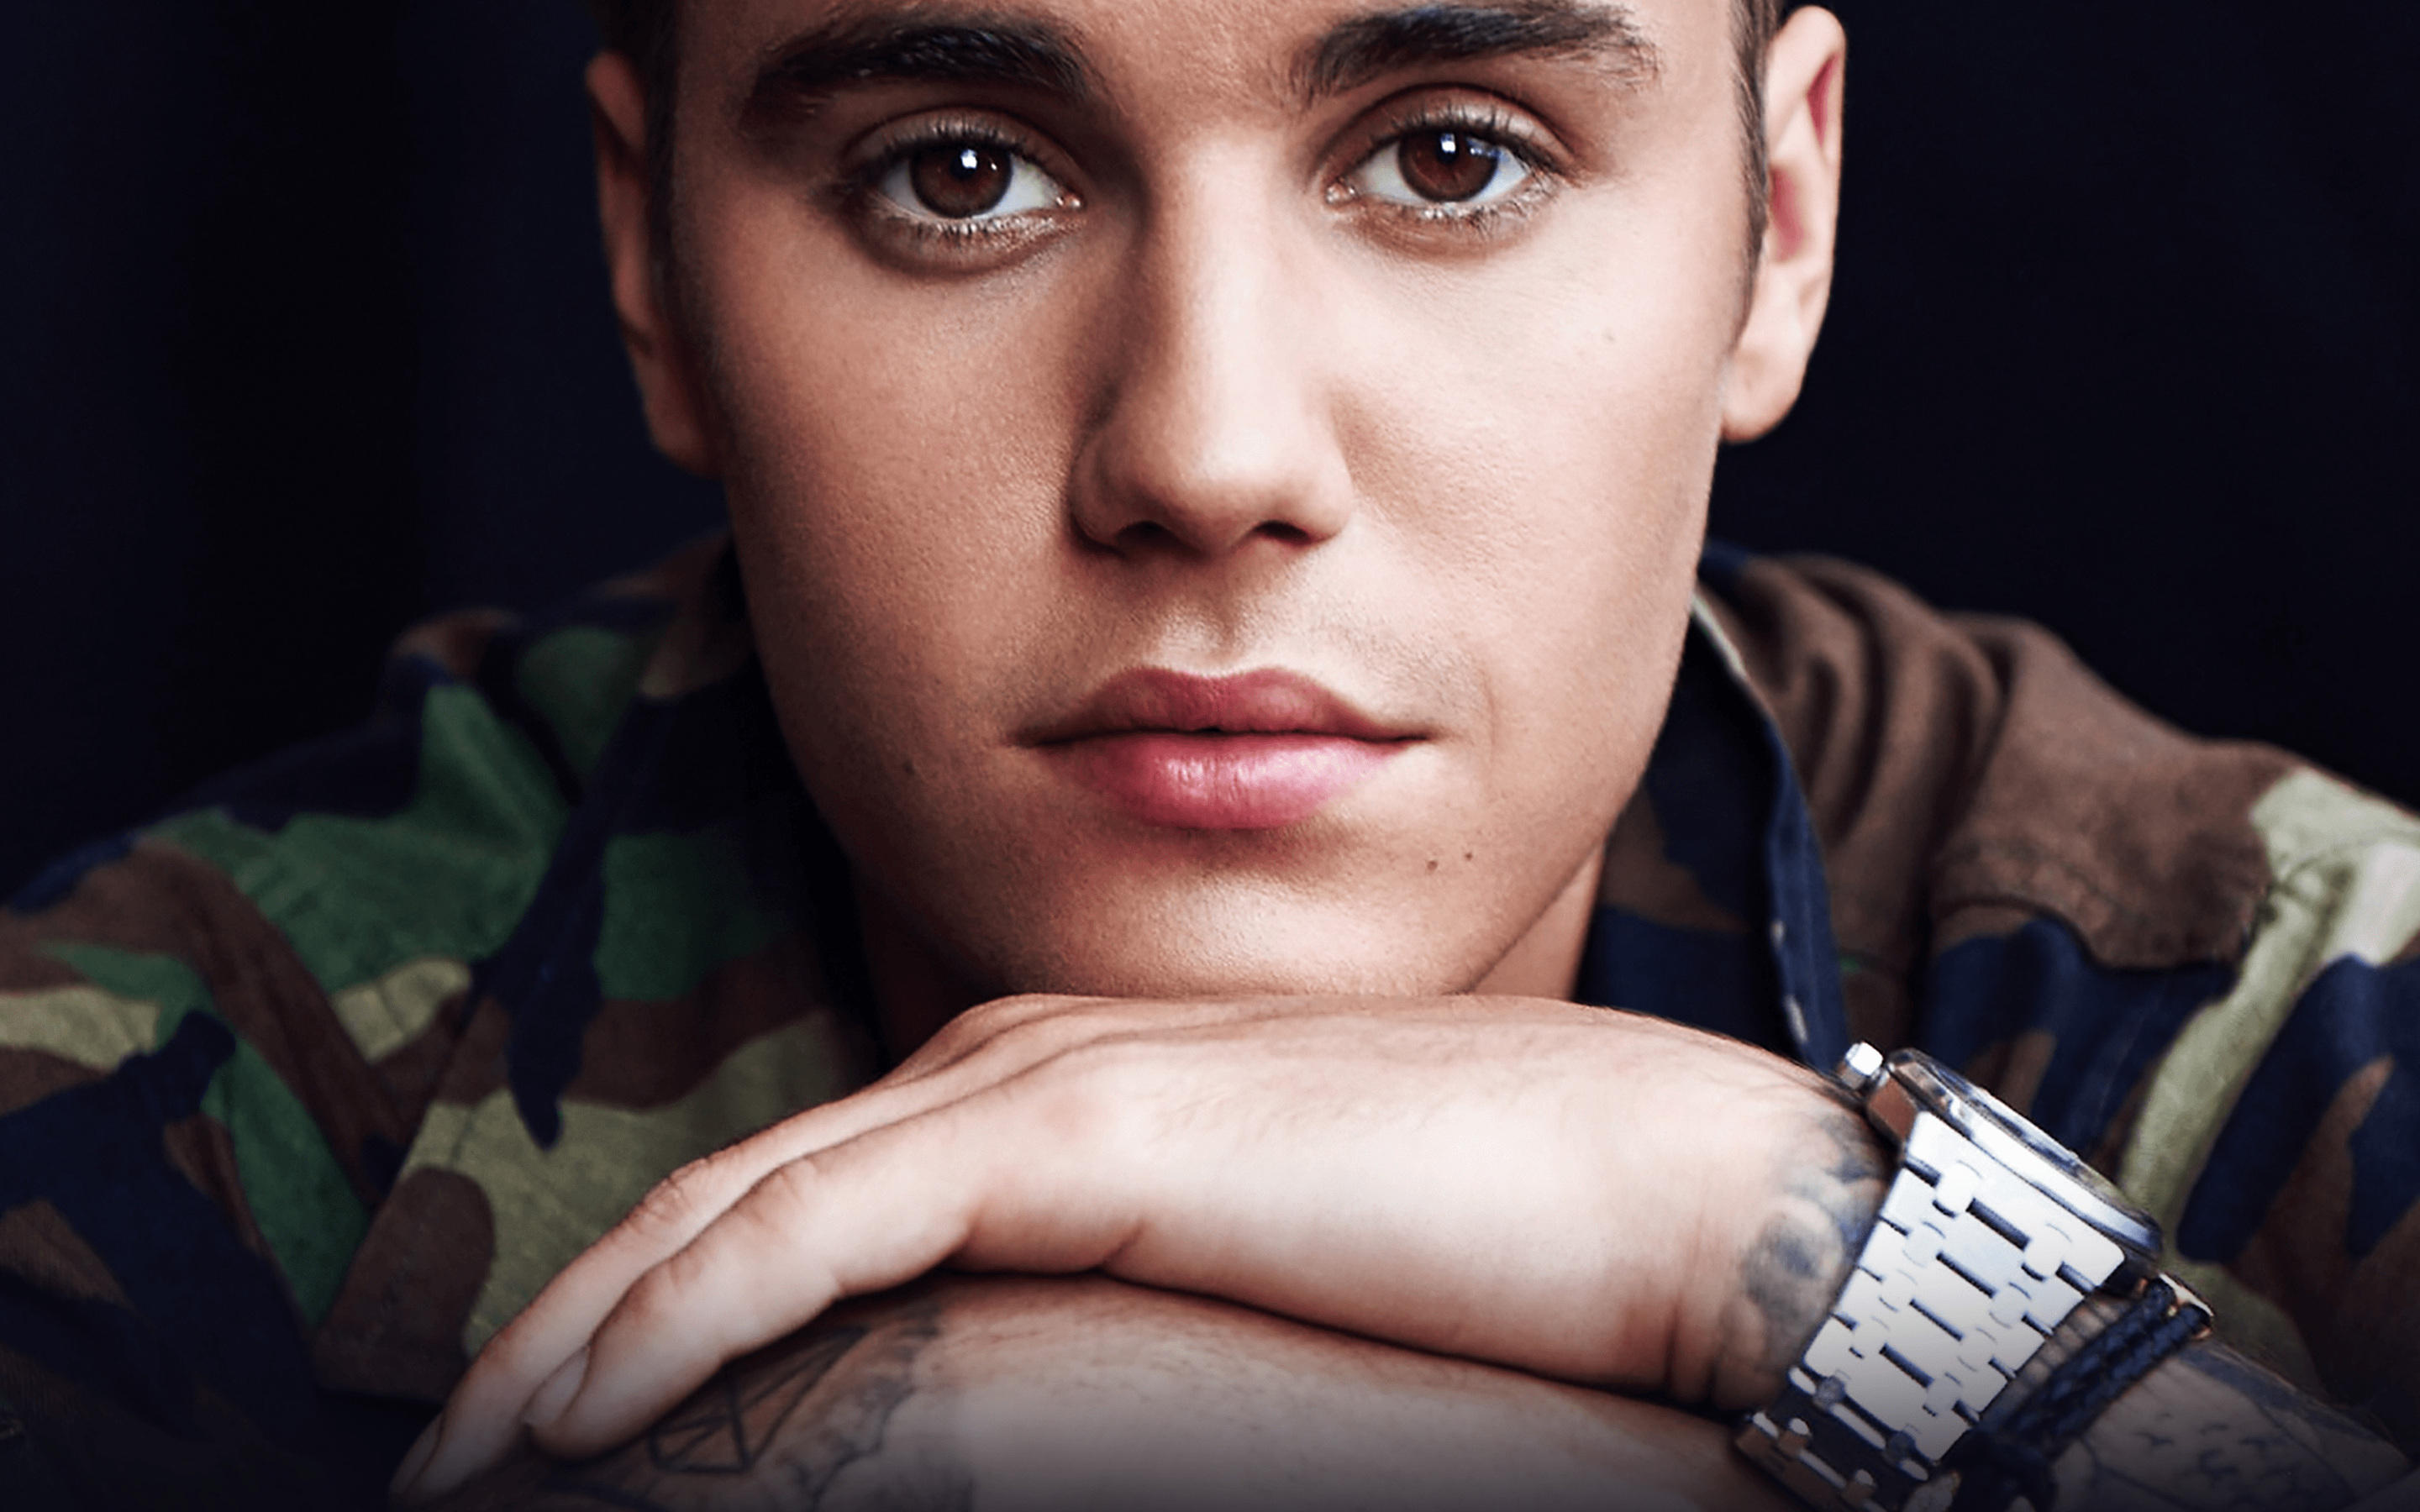 Justin Bieber Macbook Pro Retina HD 4k Wallpaper, Image, Background, Photo and Picture